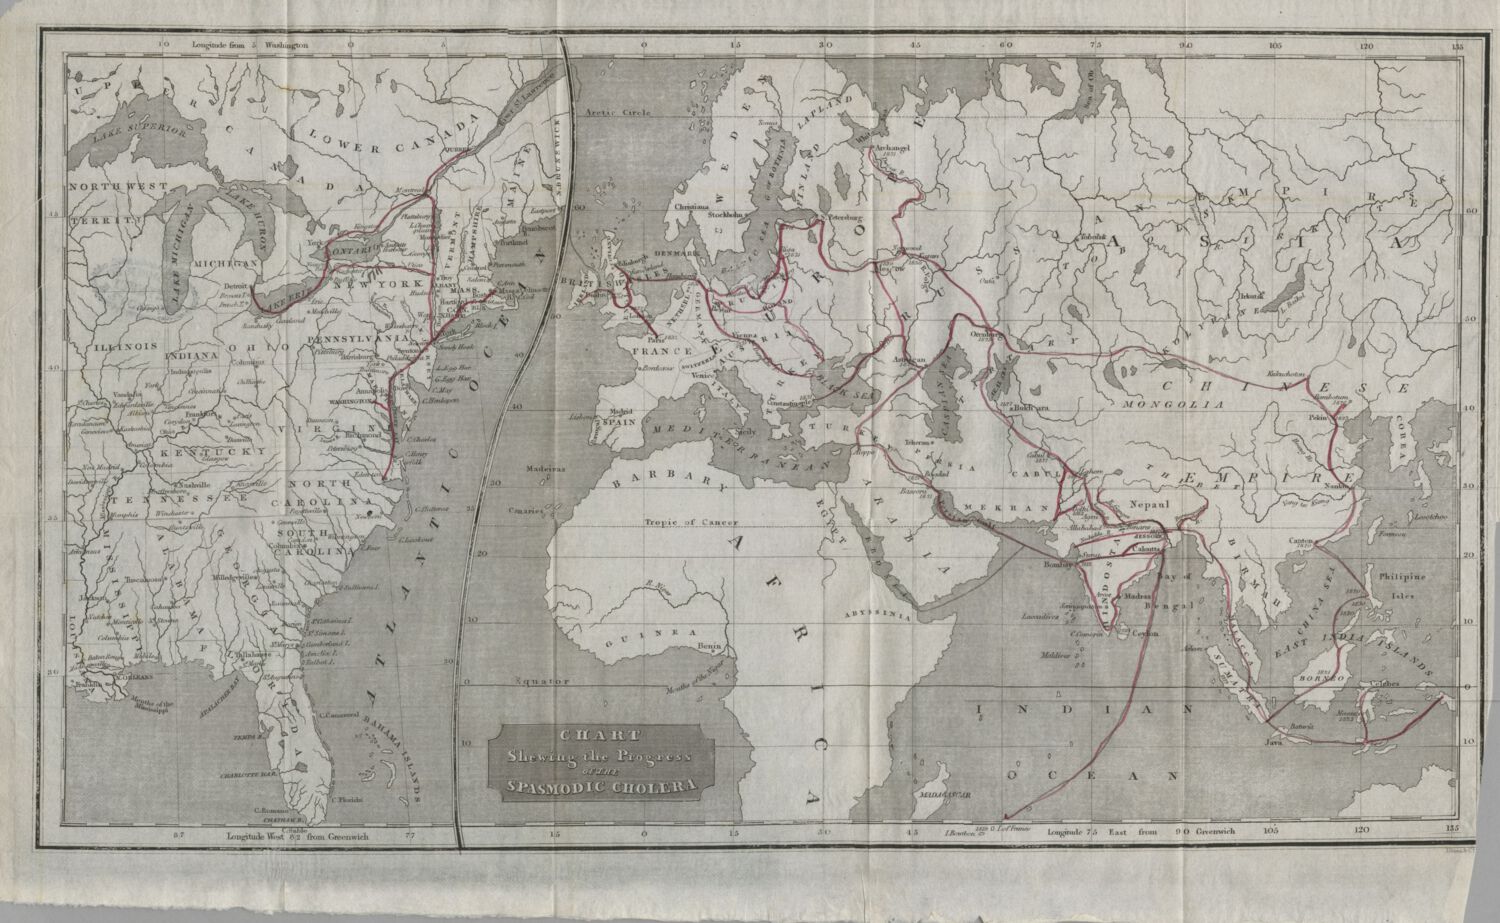 La Chart shewing the progress of Spasmodic cholera pubblicata nel 1832 nel volume di Amariah Brigham. Fonte: U.S. National Library of Medicine, https://collections.nlm.nih.gov